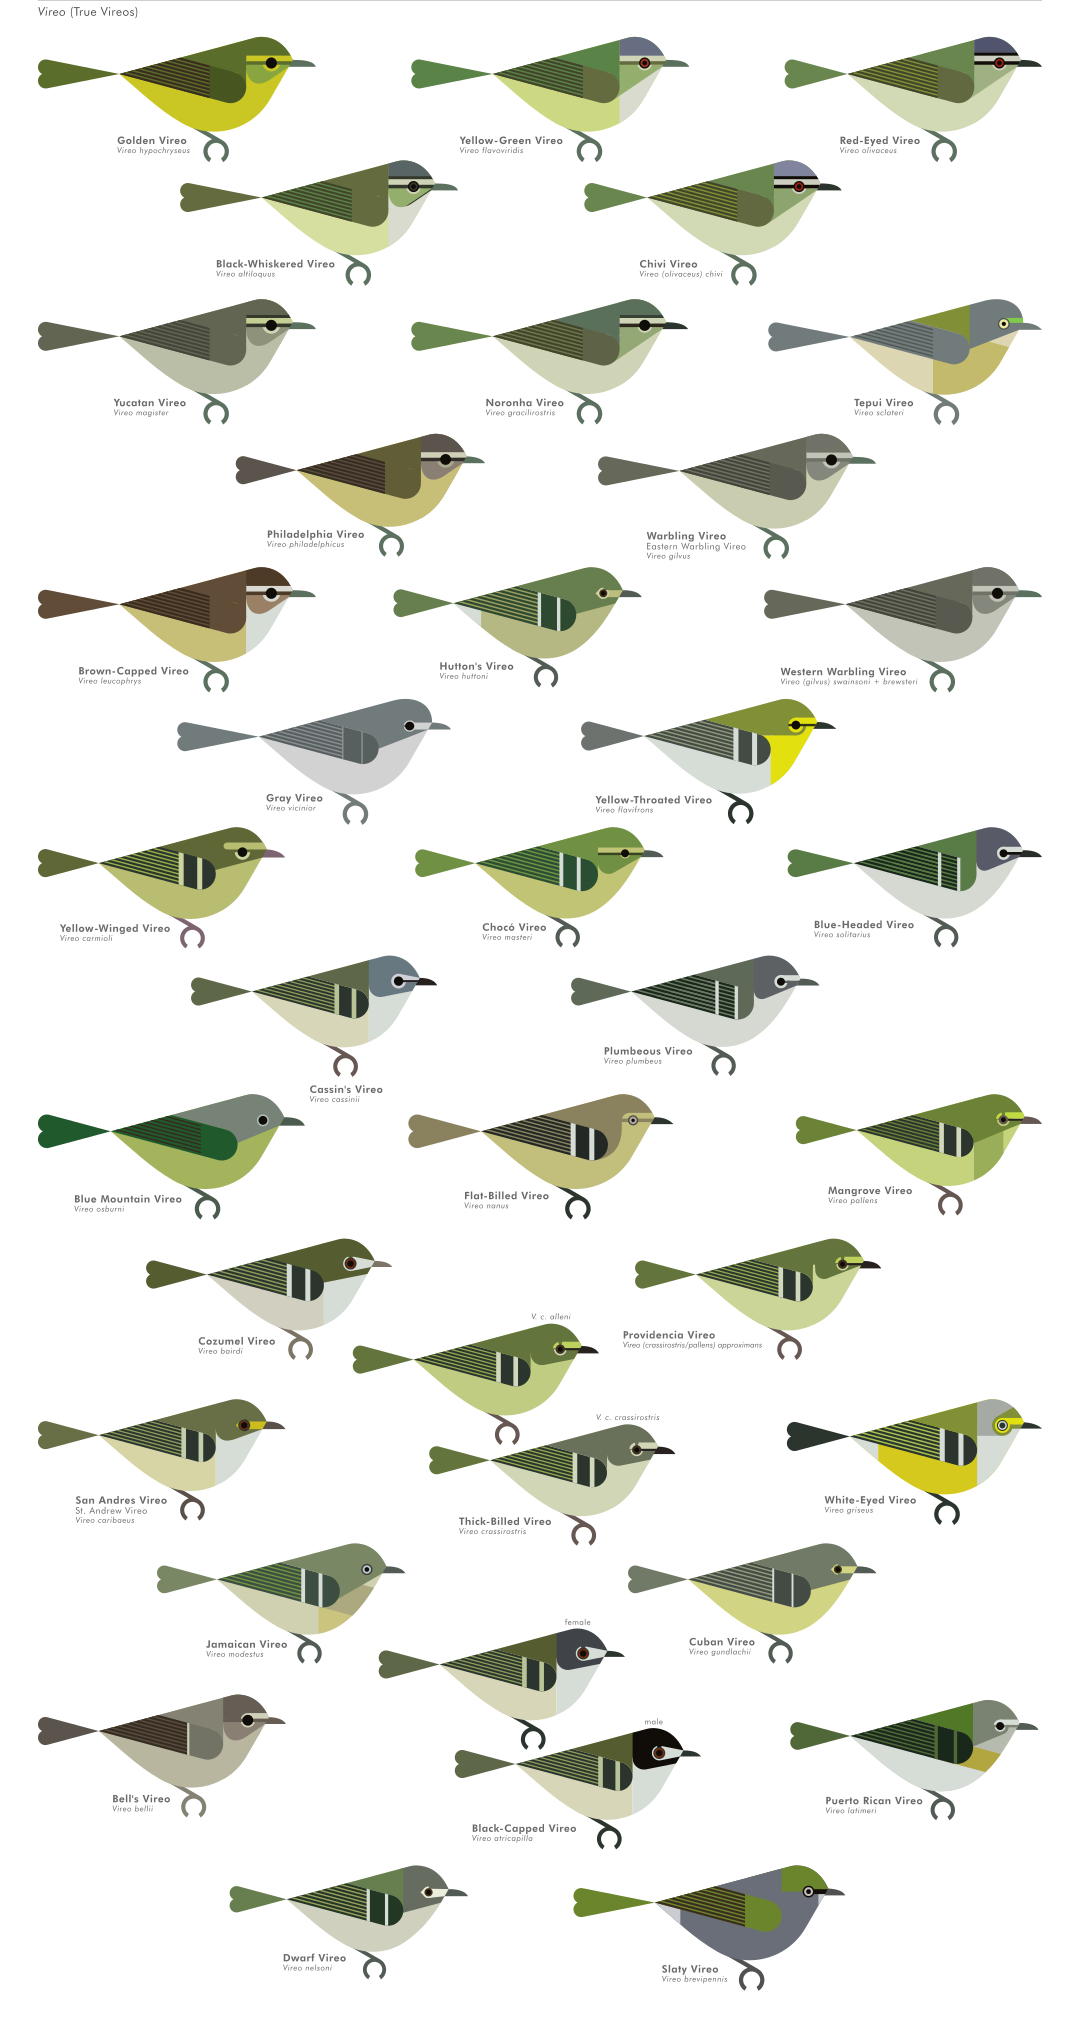 scott partridge - AVE - avian vector encyclopedia - Vireonidae - bird vector art